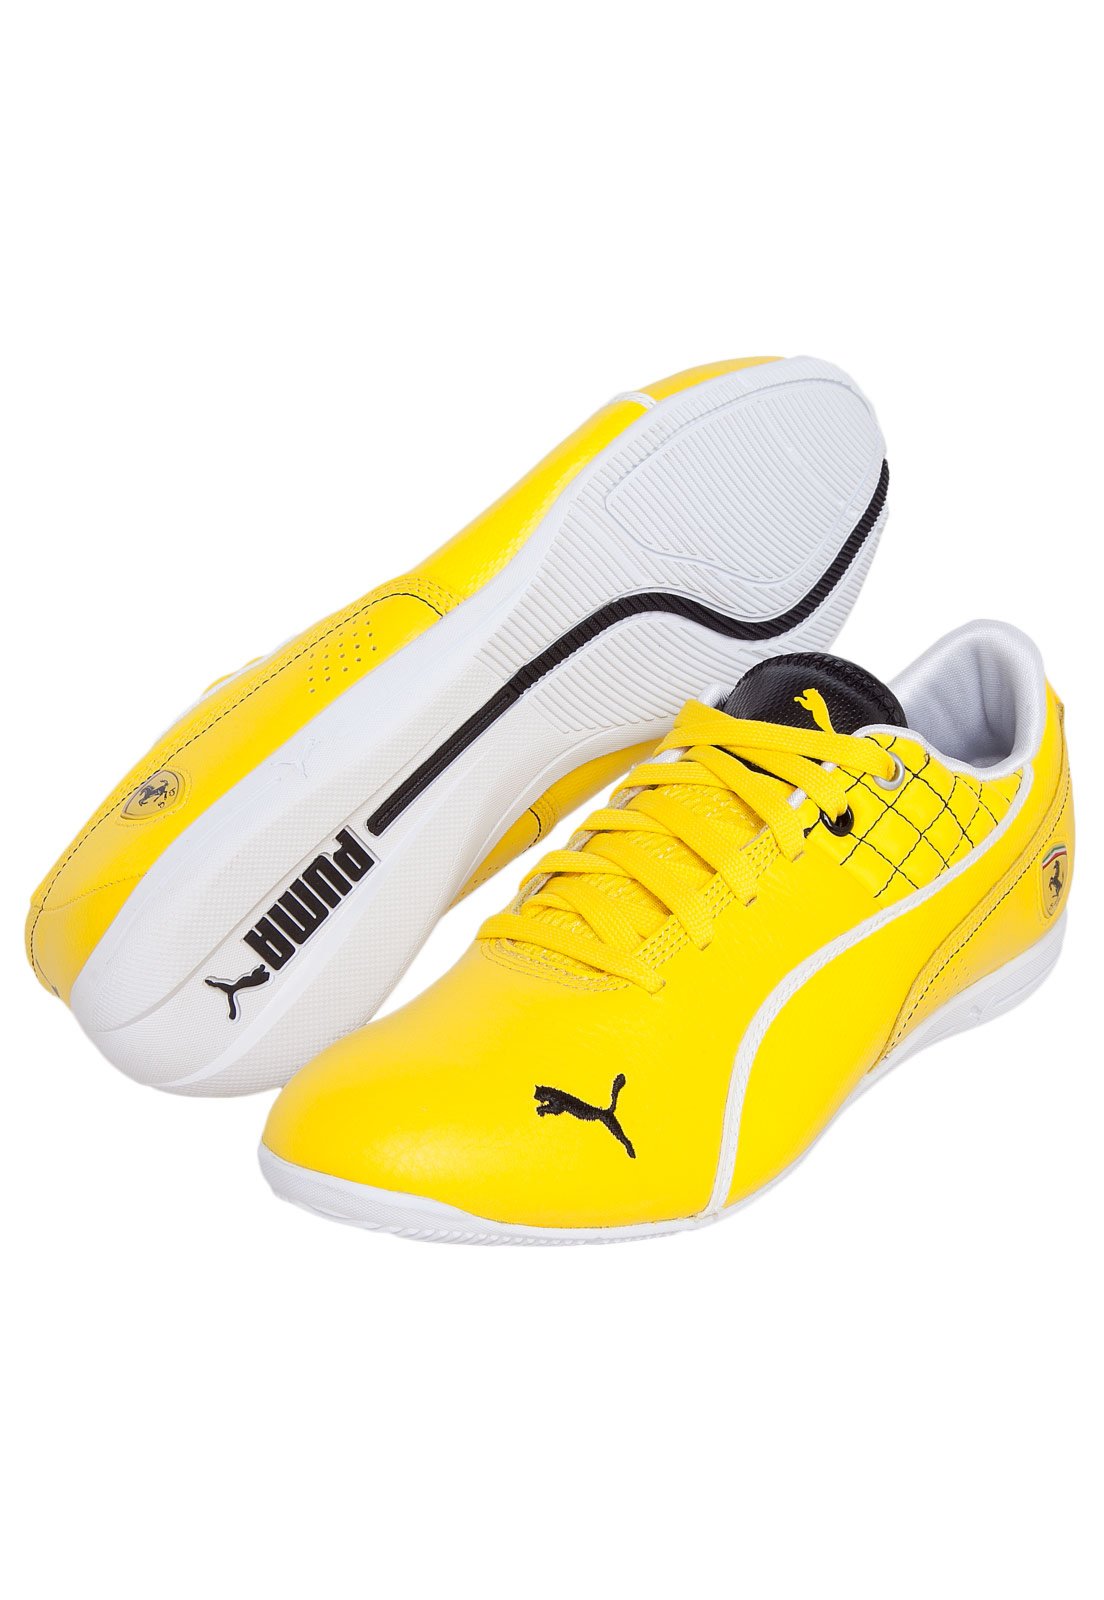 tenis puma amarelo